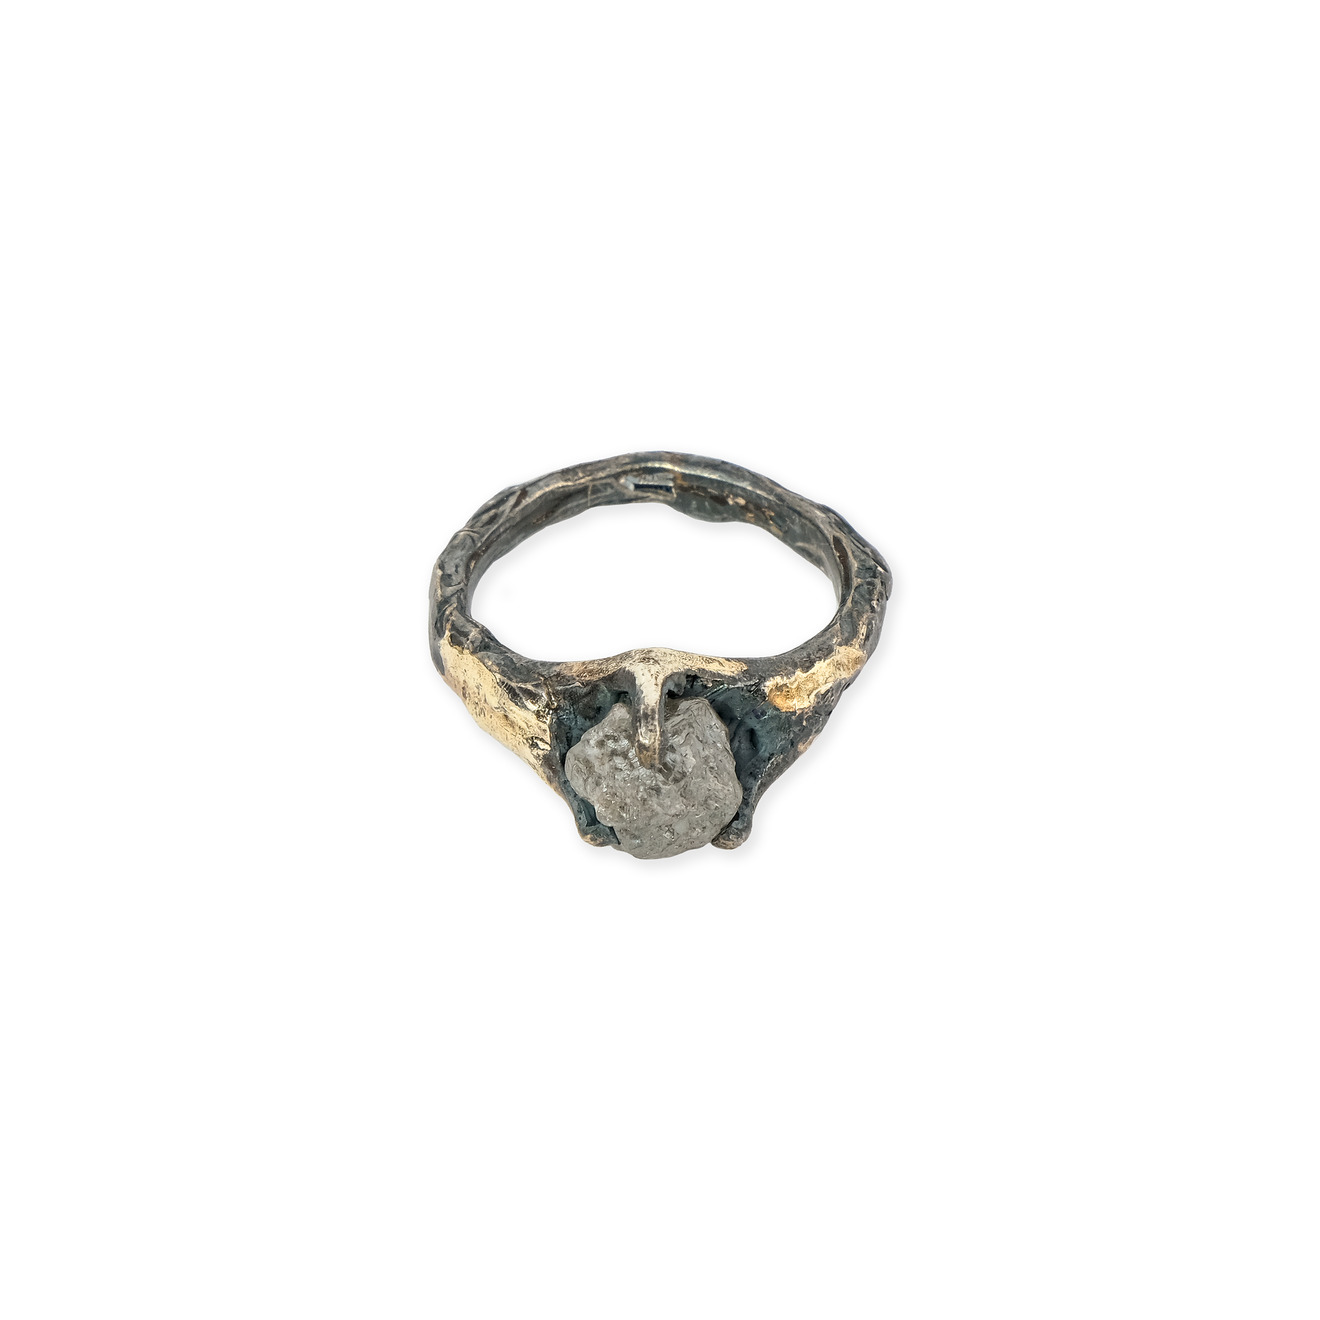 Kintsugi Jewelry Кольцо Wild power из серебра с позолотой и кристаллом кварца фотографии